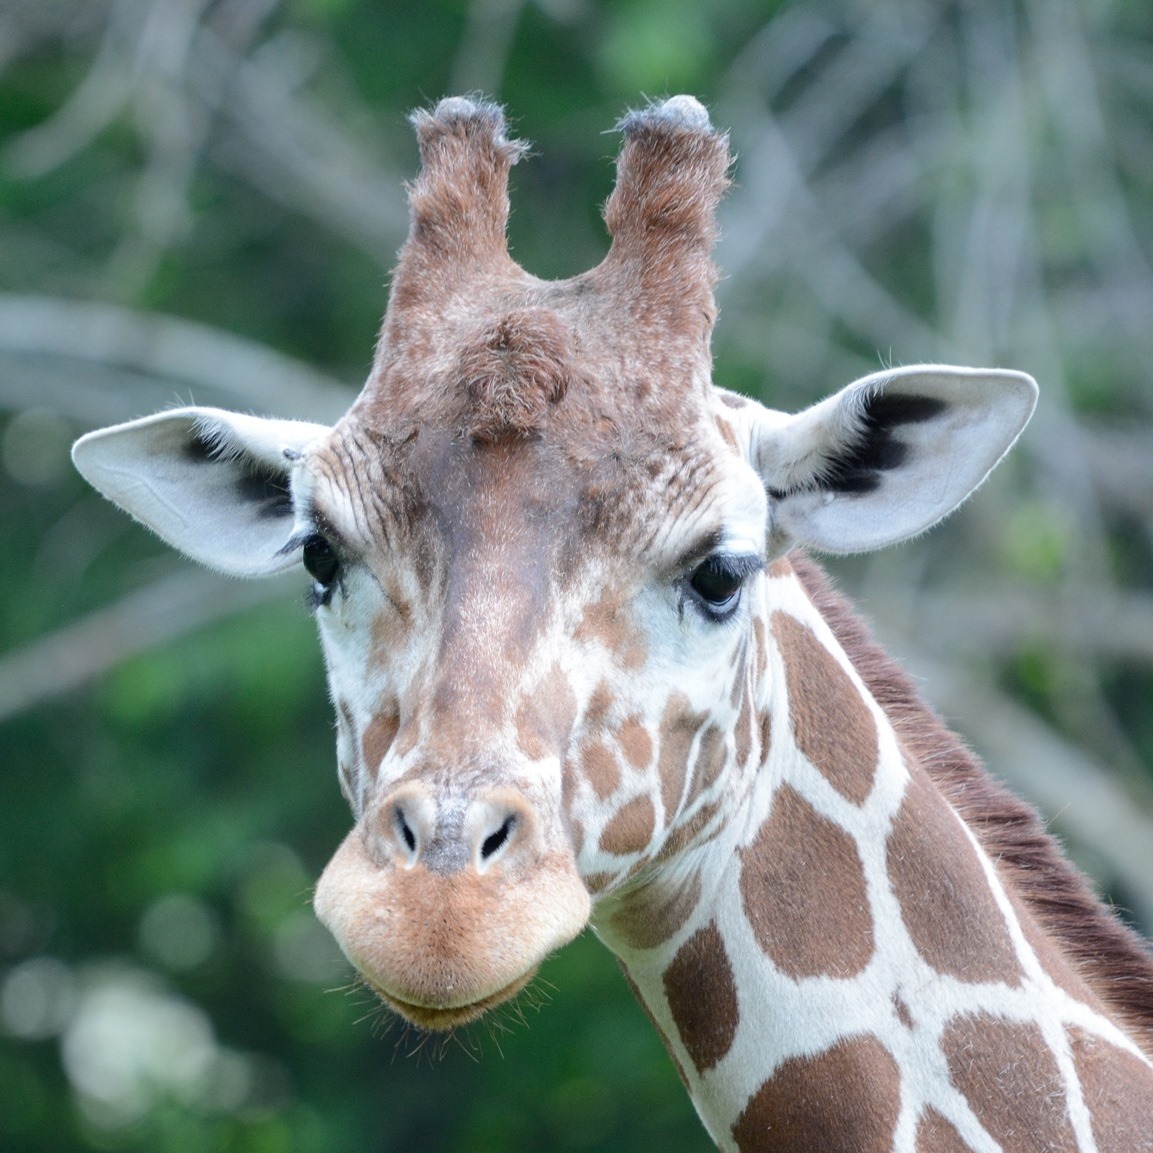 Zoo Girafe - St. Louis Zoo